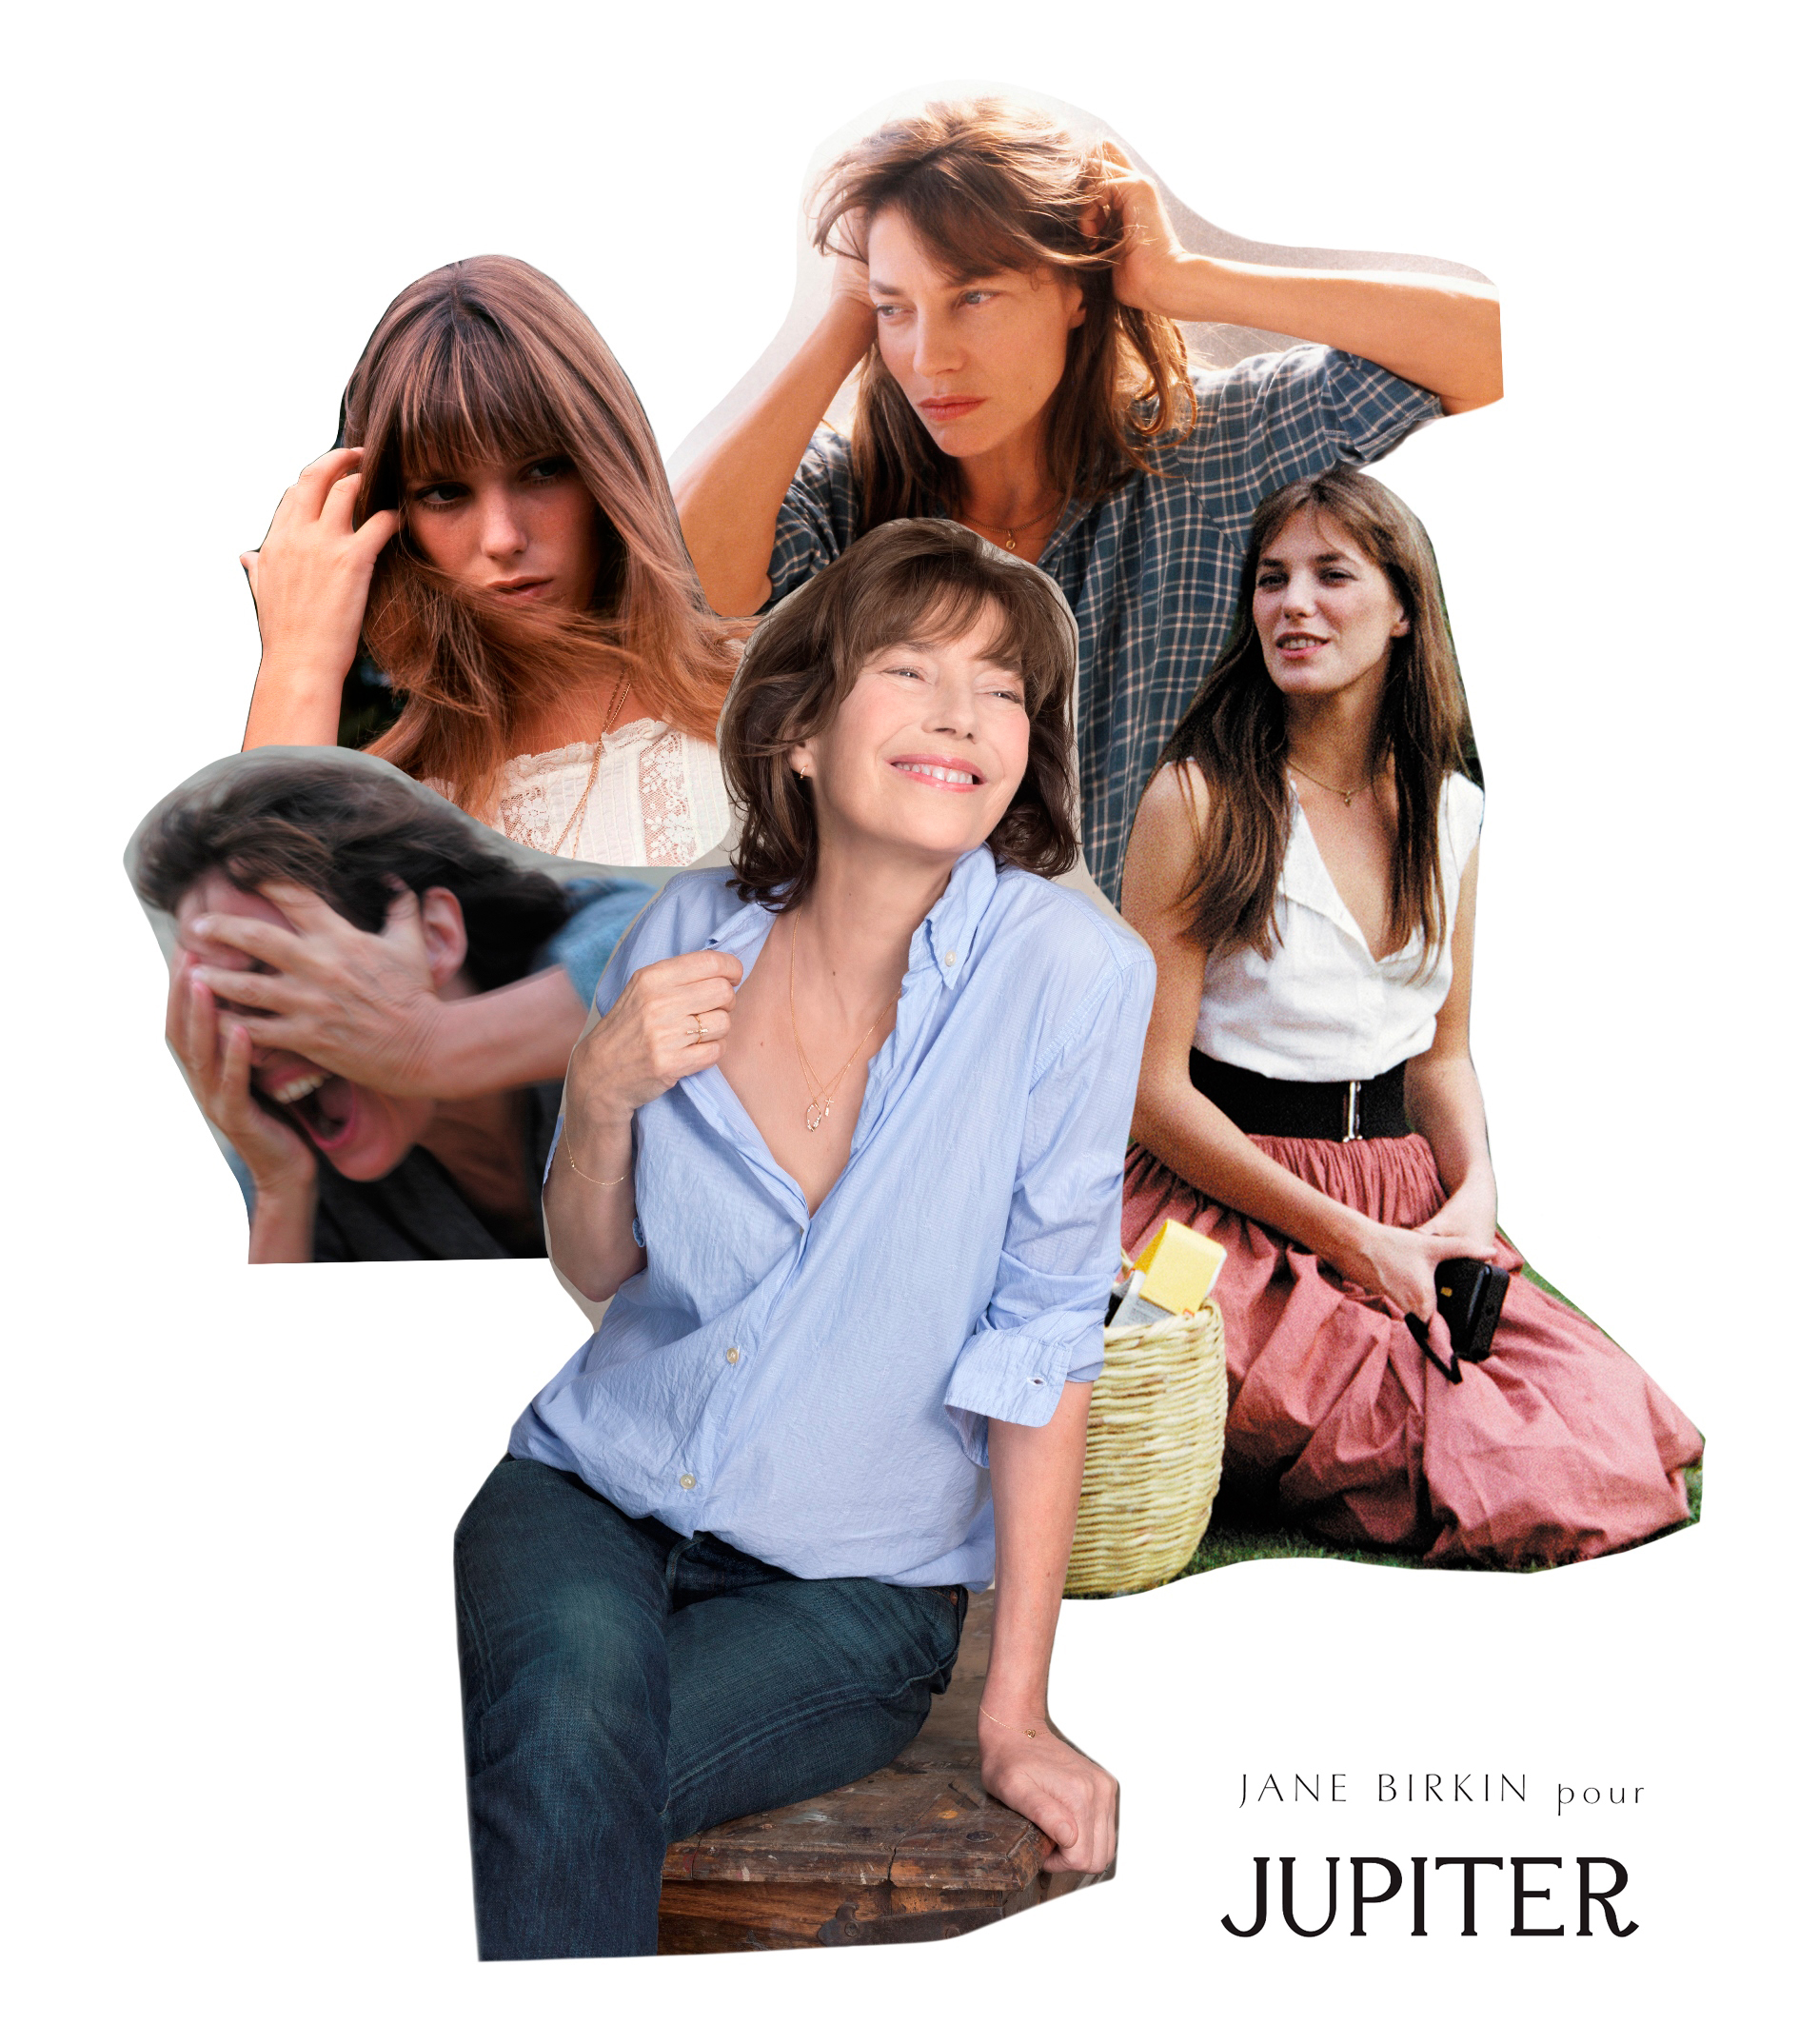 Jupiter 14spring Summerのビジュアルモデルに 国内ファッションブランド初ジェーン バーキン を起用 ルイールコーポレーションのプレスリリース